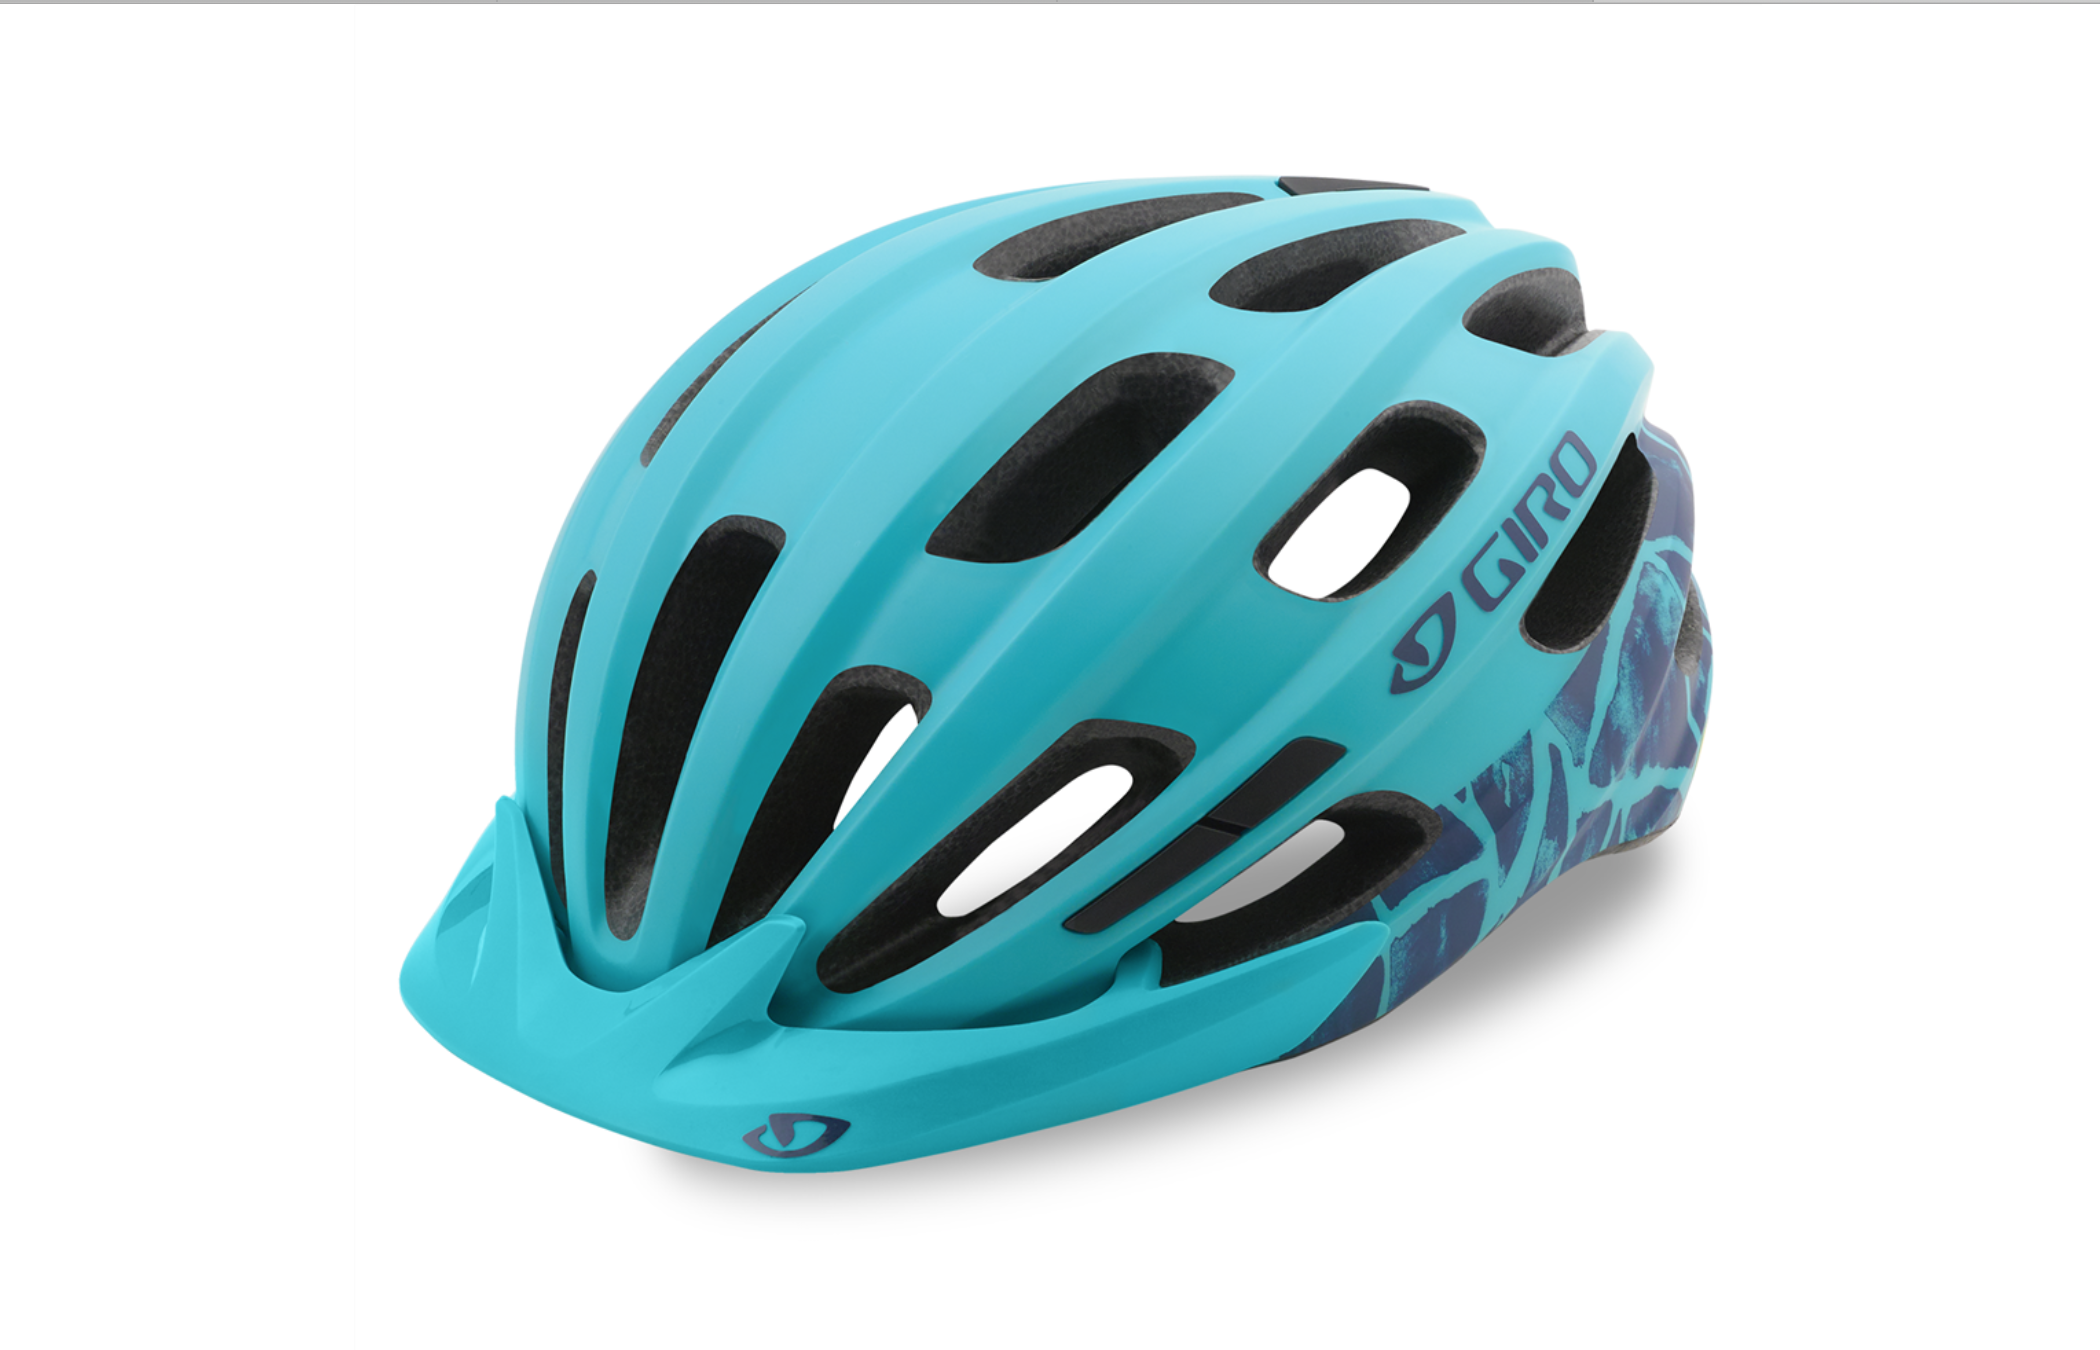 Giro Scamp MIPS Kinder Fahrrad Helm türkis blau/schwarz 2019 